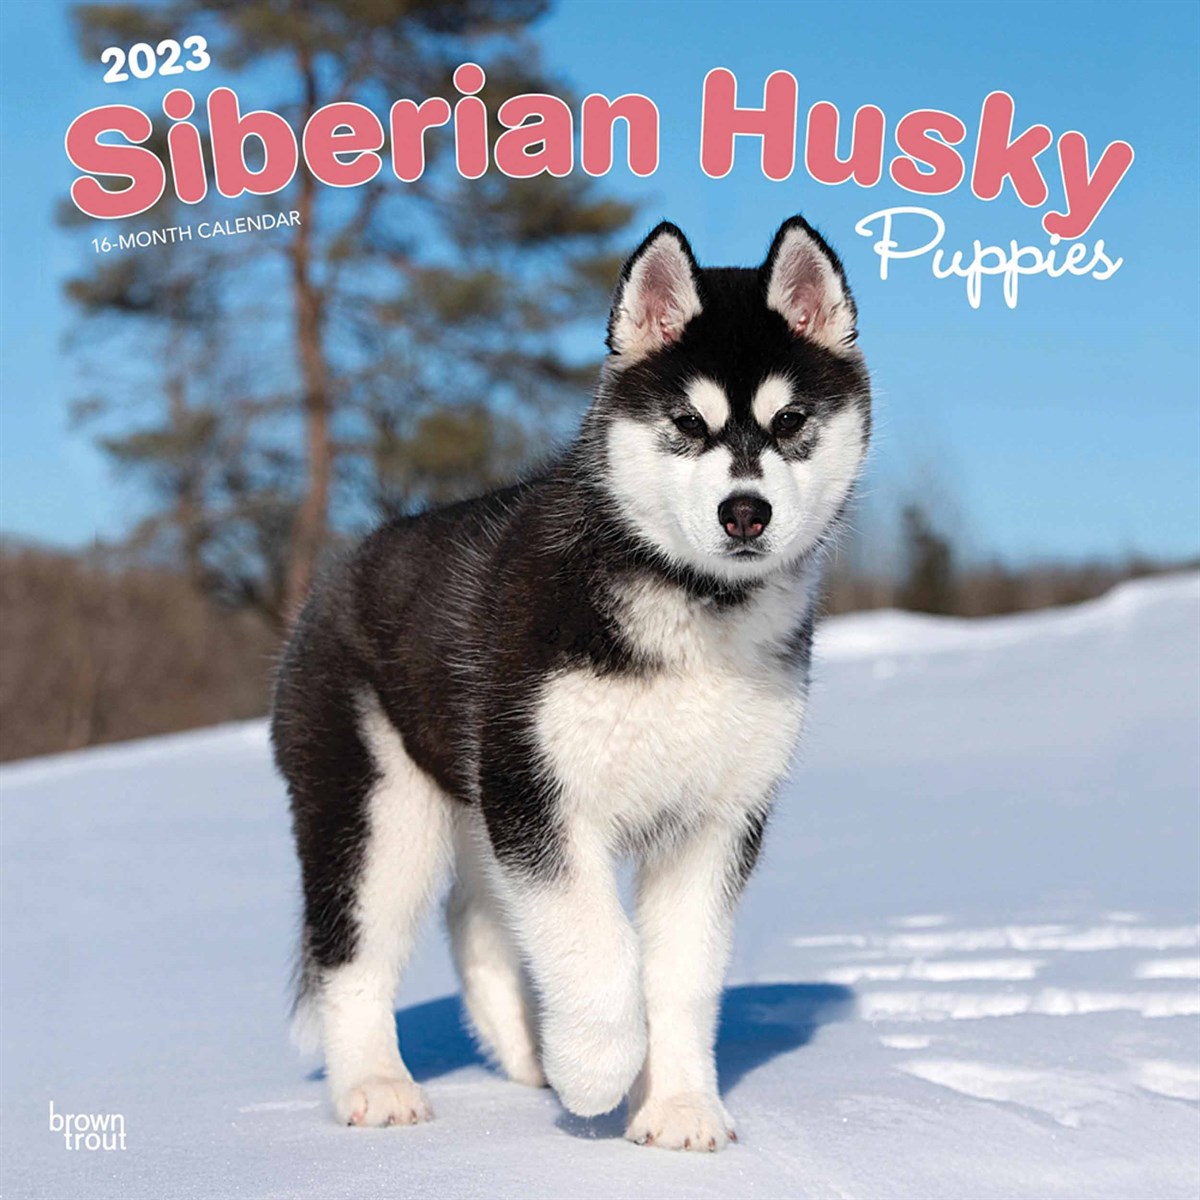 Siberian Husky Puppies 2023 Calendars